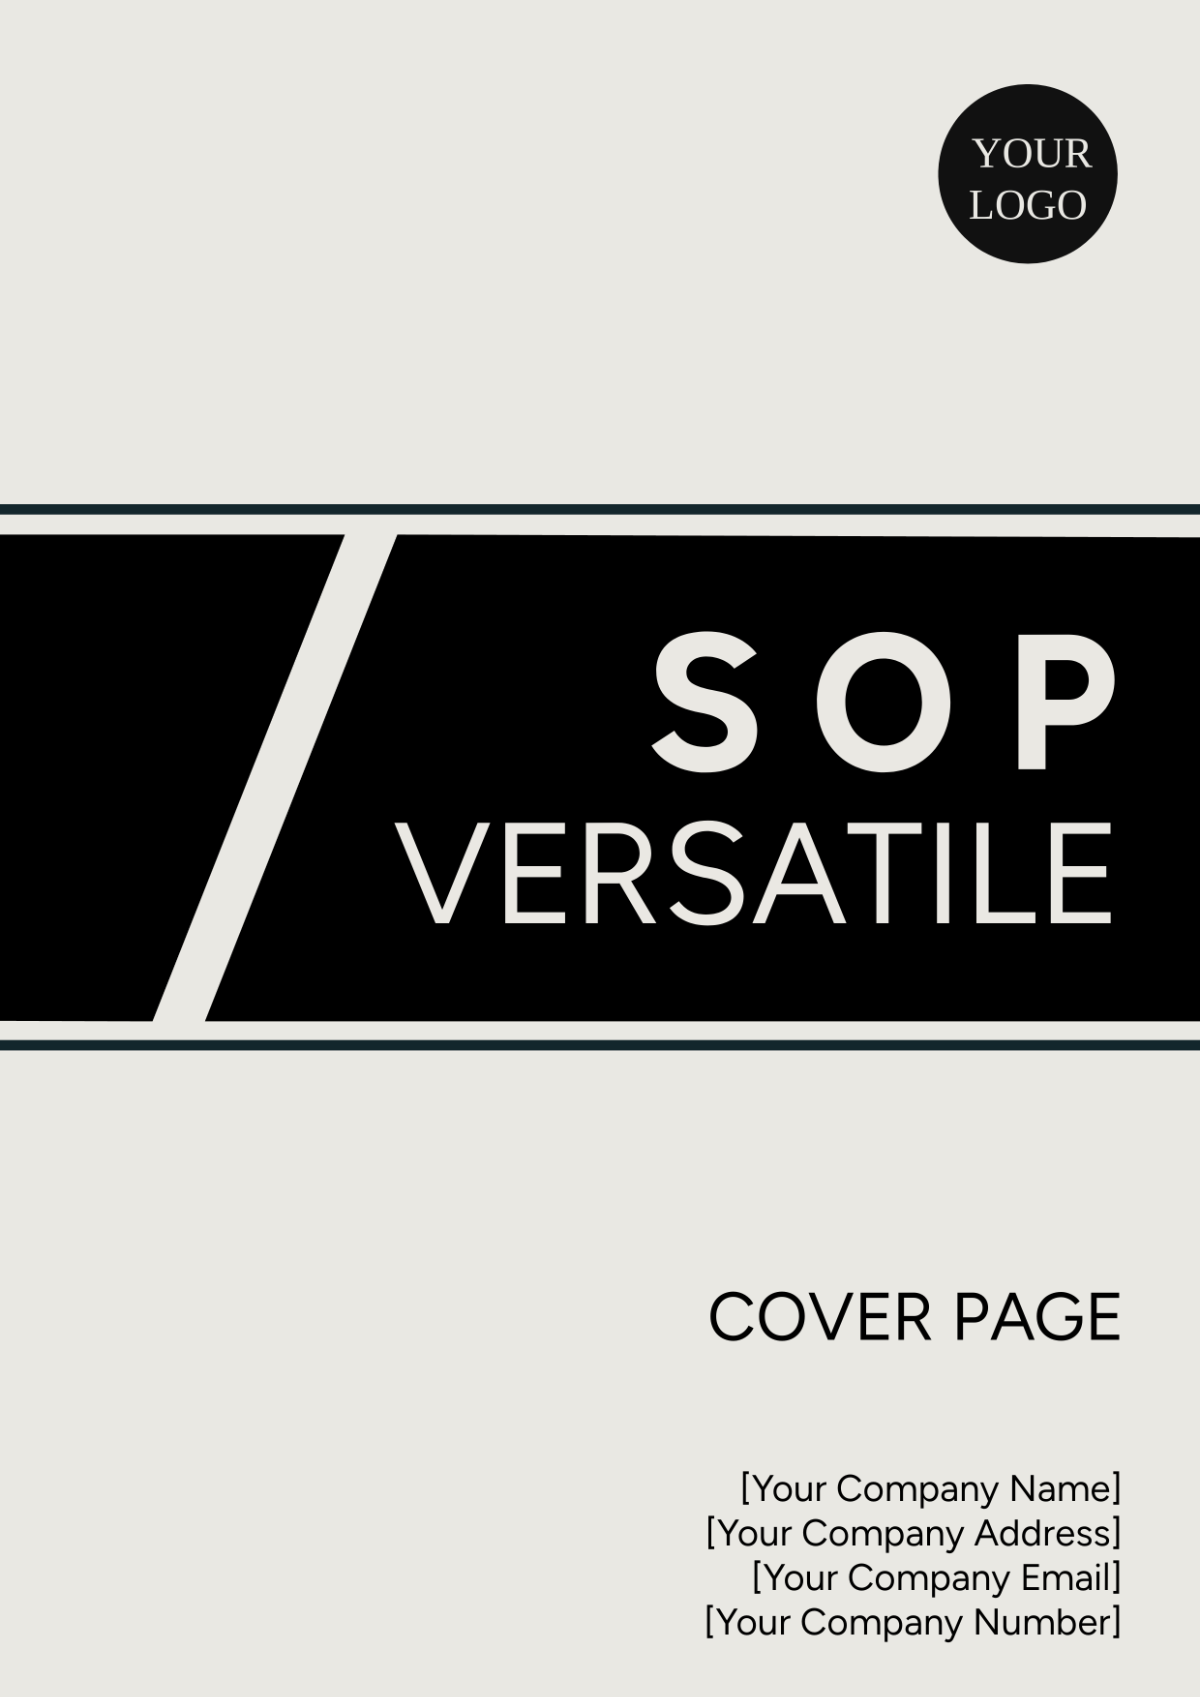 SOP Versatile Cover Page